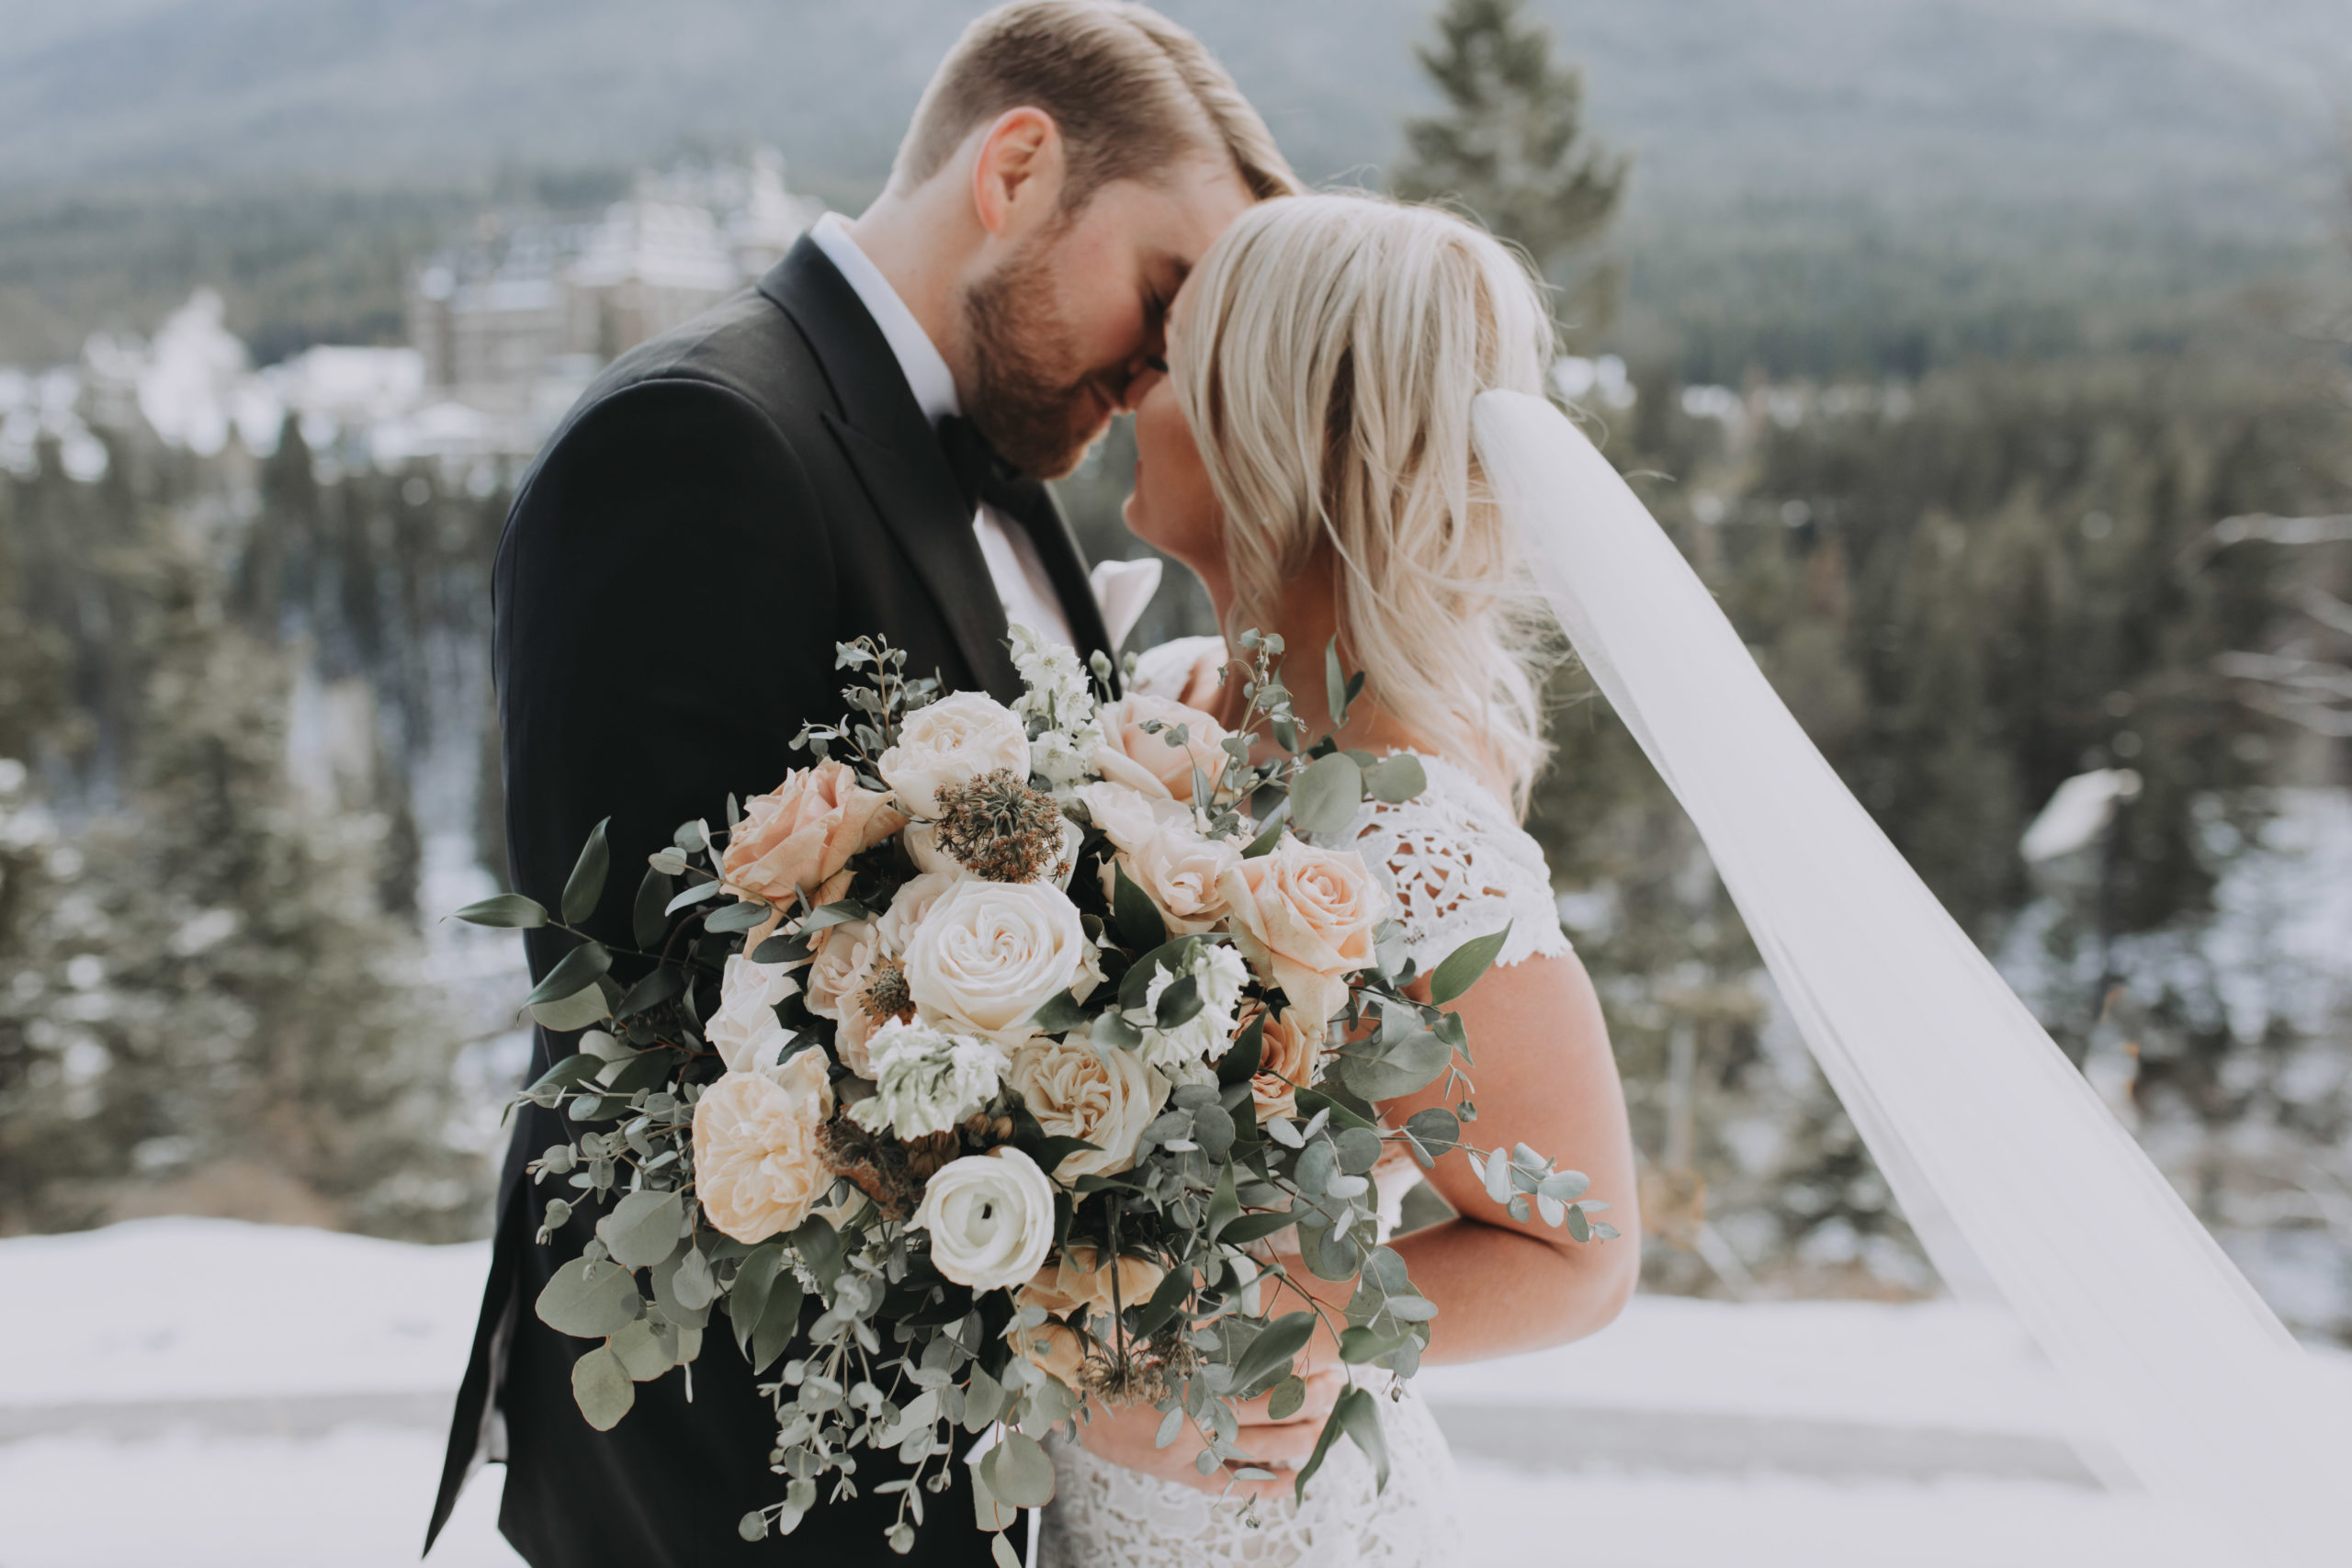 Where to Buy Wedding Guest Attire in 2023 - Rocky Mountain Bride